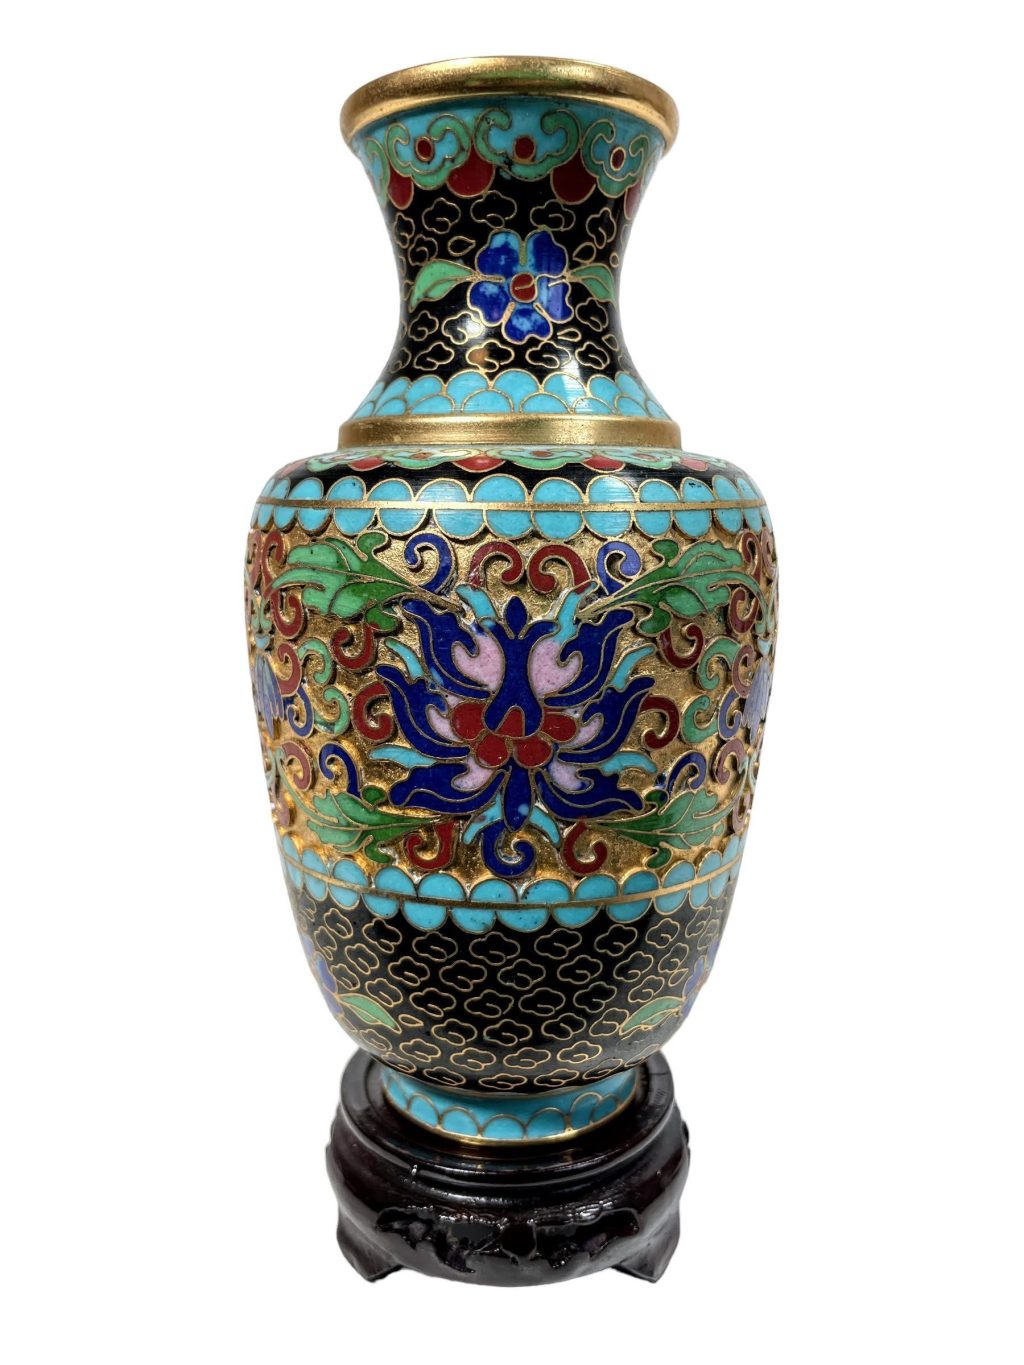 Vintage Chinese Blue Gold Cloisenee Cloisonnee Vase On Wooden Stand enamelled pot urn display decorative c1980-90’s